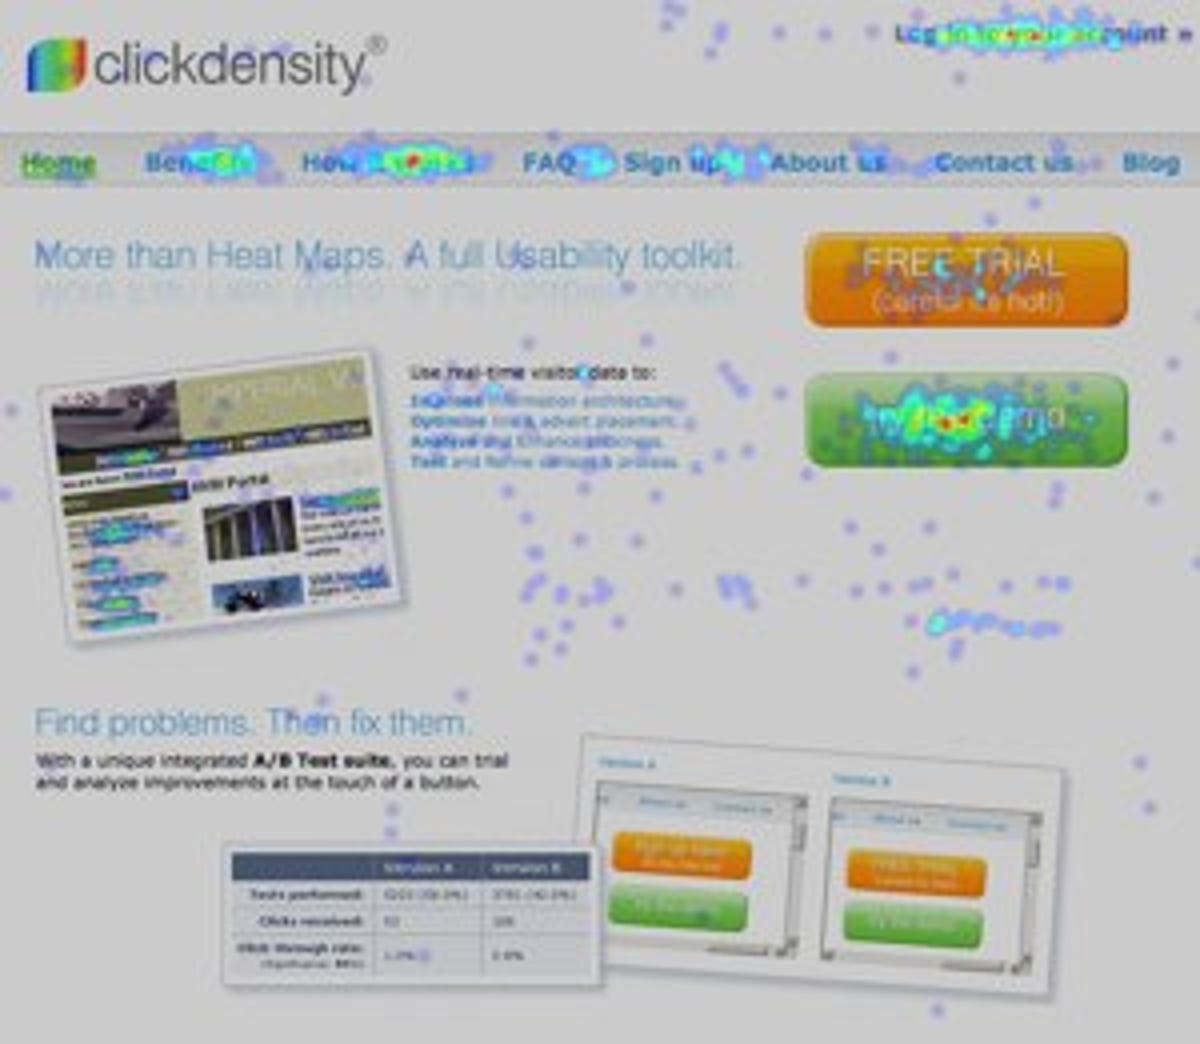 ClickDensity